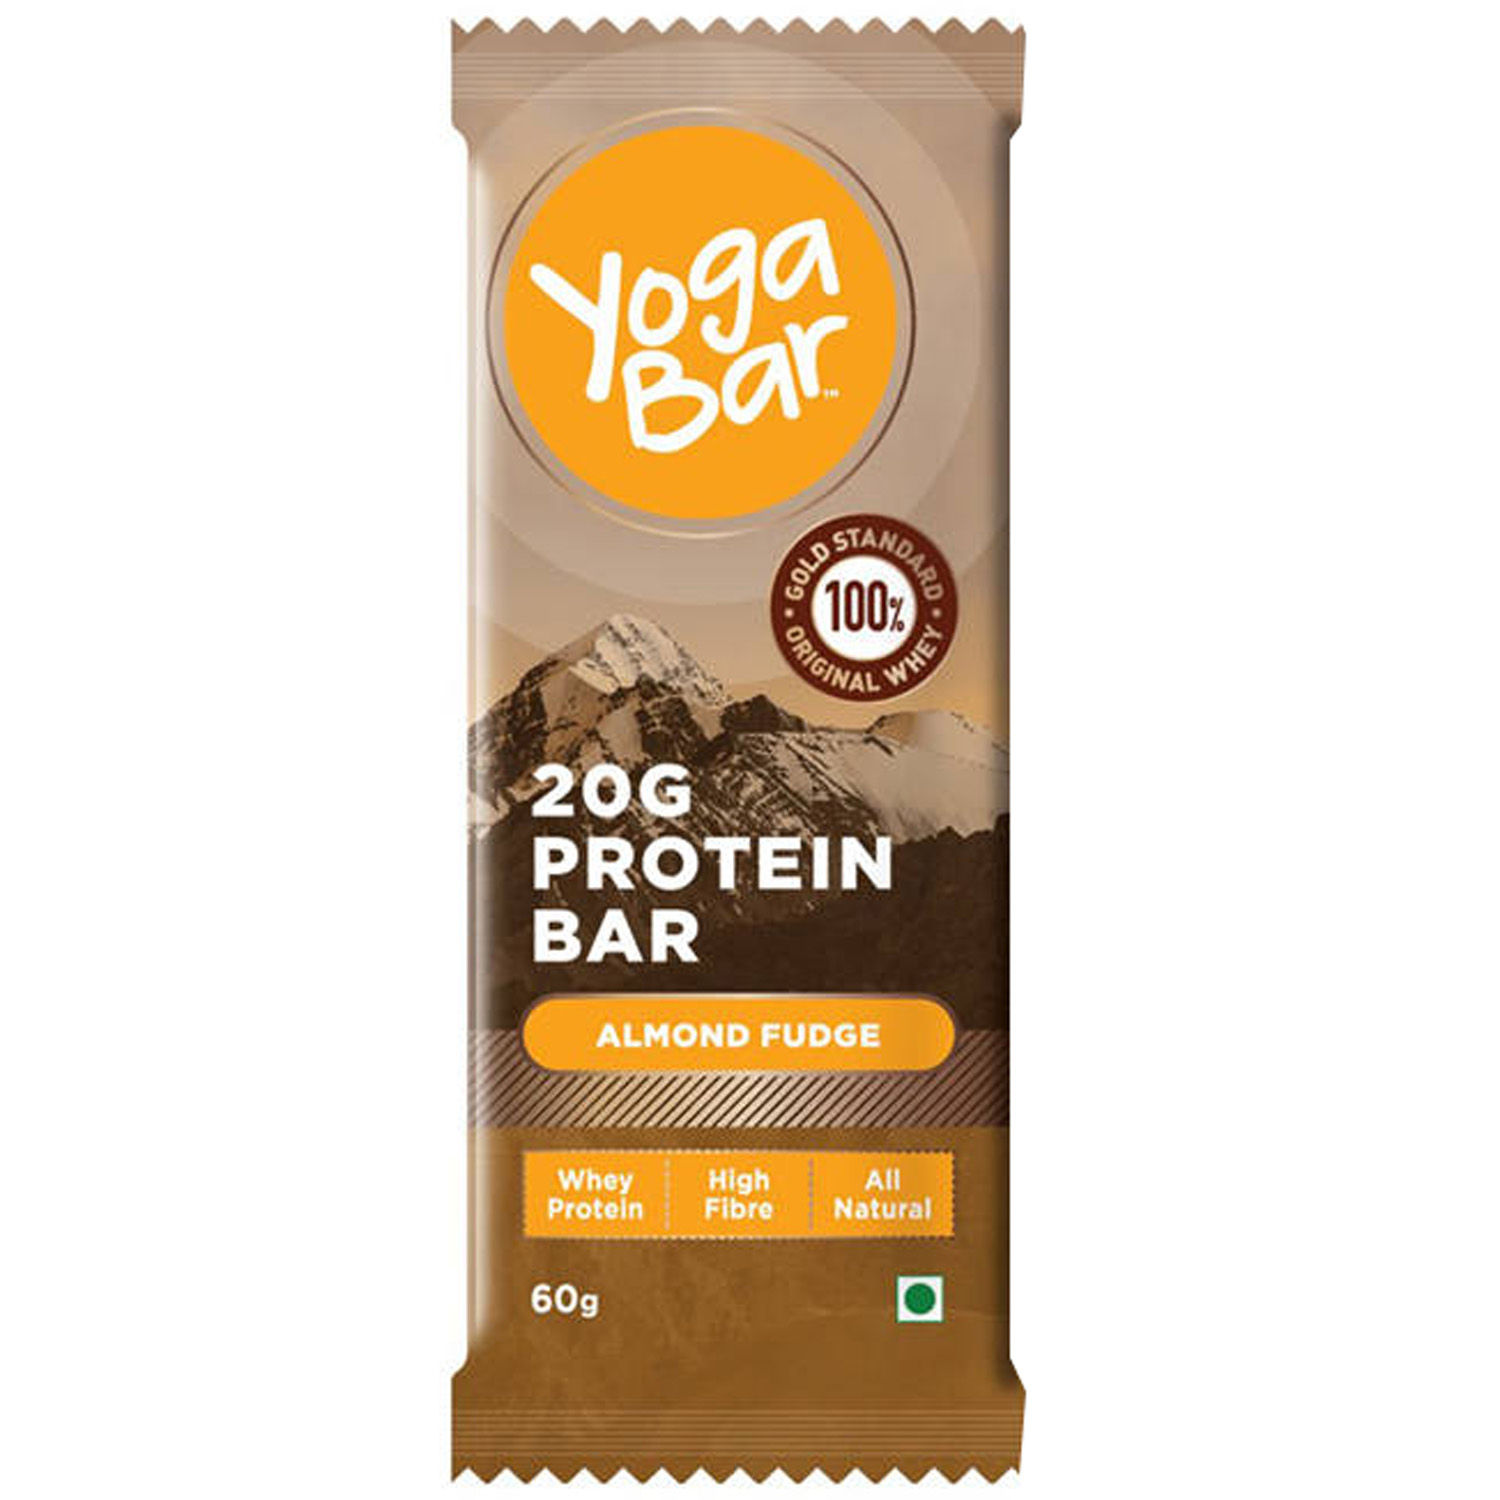 Yoga Bar Almond Fudge 20 gm Protein Bar, 60 gm, Pack of 1 